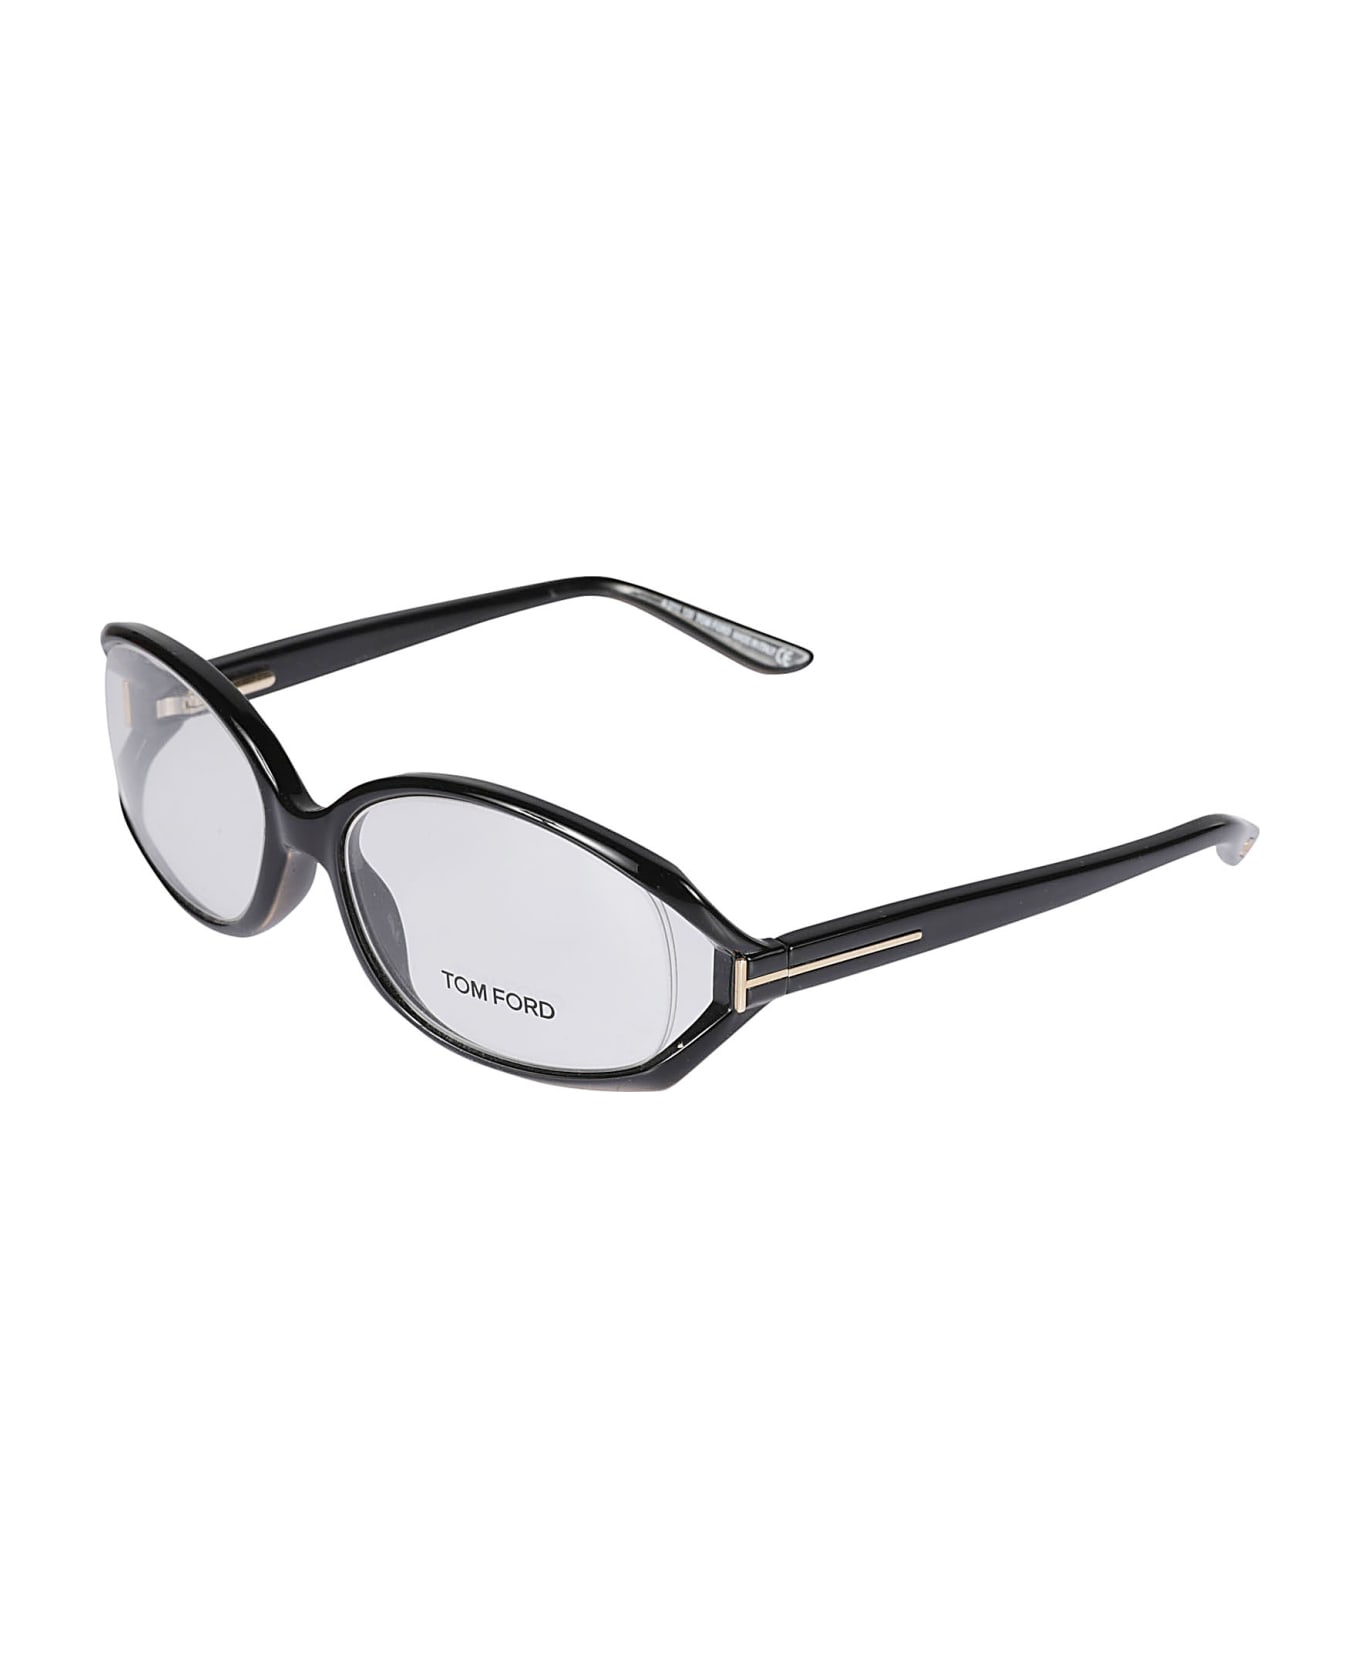 Tom Ford Eyewear Classic Clear Lense Glasses - Nero